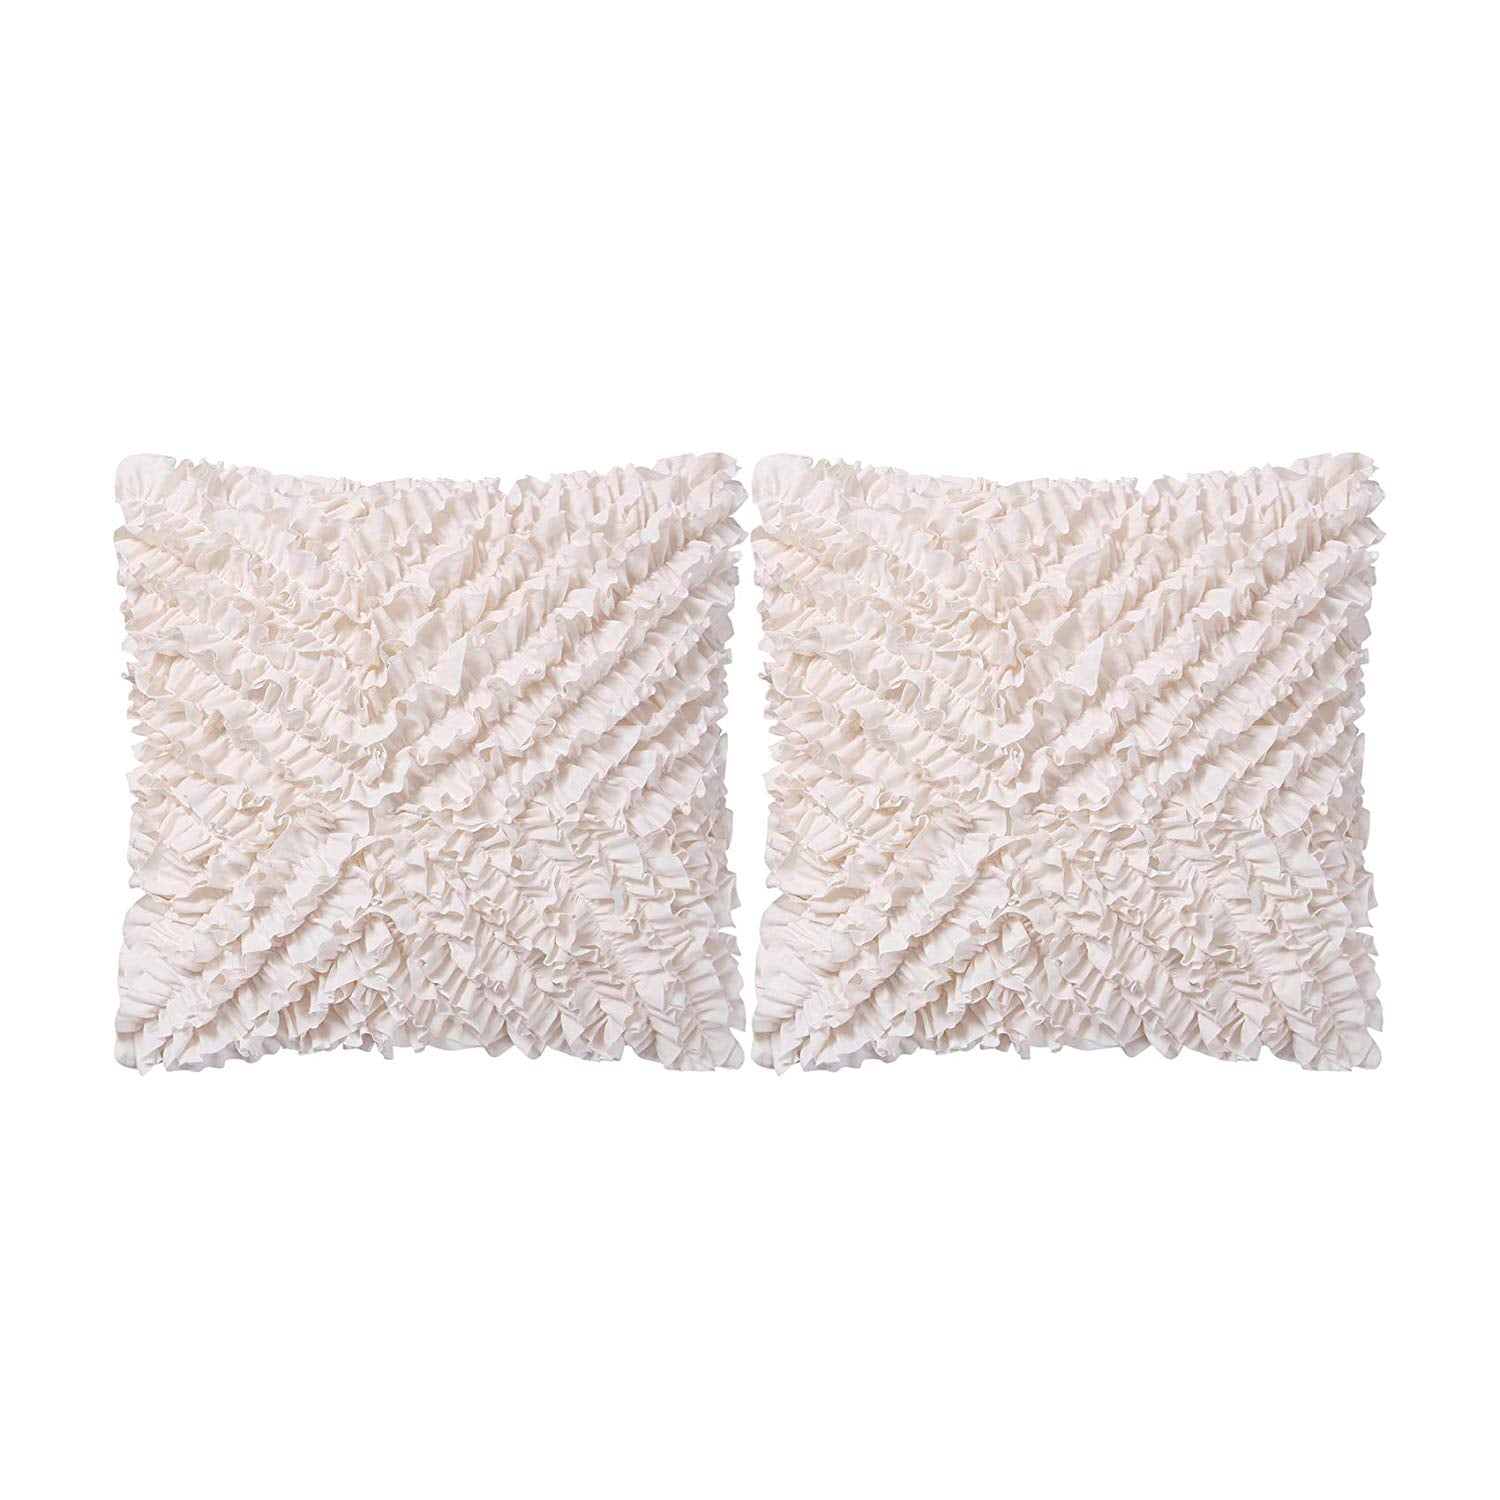 MoMA Decorative Throw Pillow Covers (Set of 2) - Pillow Cover Cushion Cover - Off White Cream Throw Pillow Cover - Decorative Sofa Throw Pillow Cover - Square Decorative Pillowcase - Cream - 18" x 18"